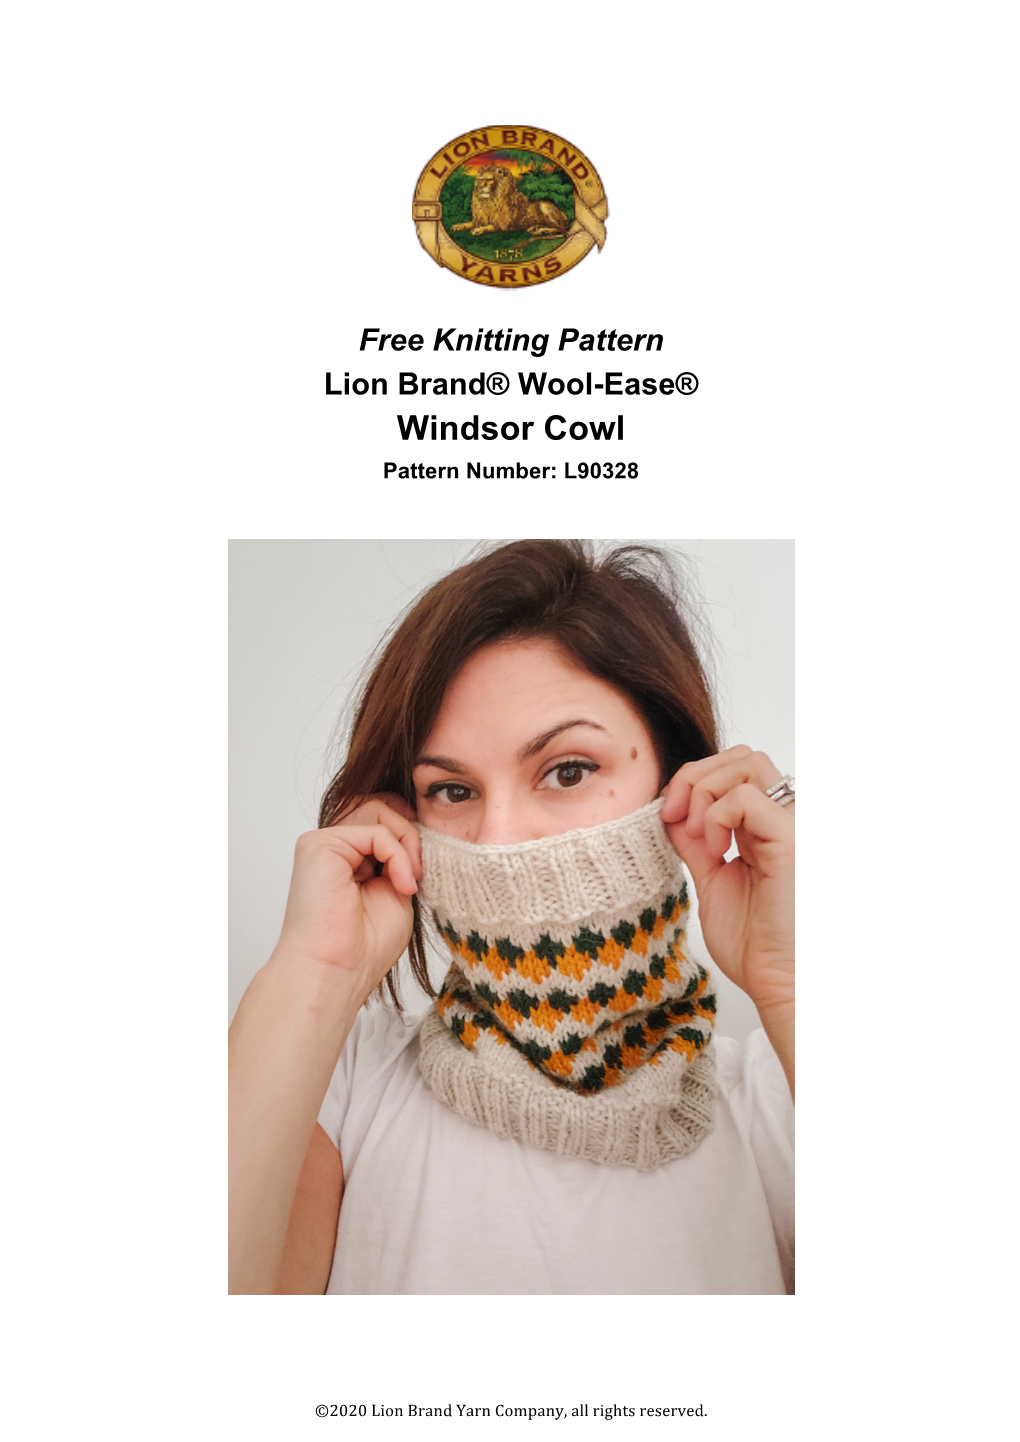 Free Knitting Pattern Lion Brand® Wool-Ease® Windsor Cowl Pattern Number: L90328